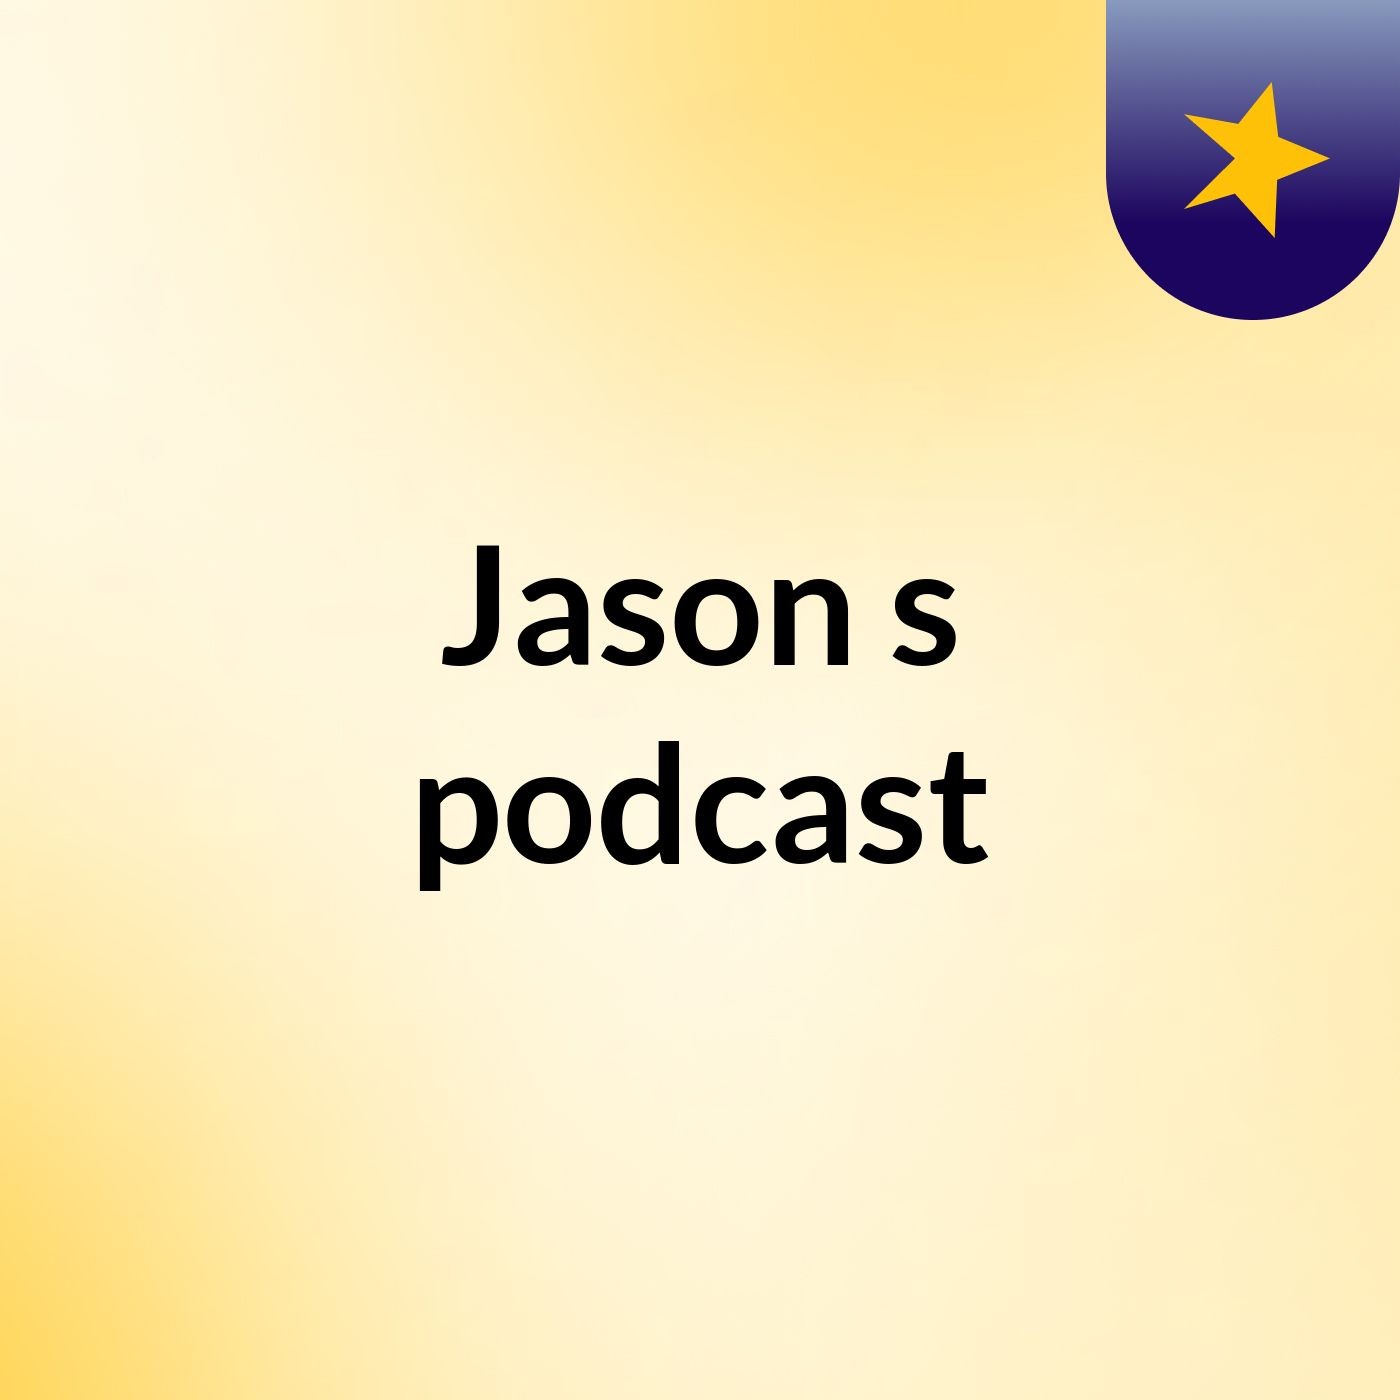 Jason's podcast